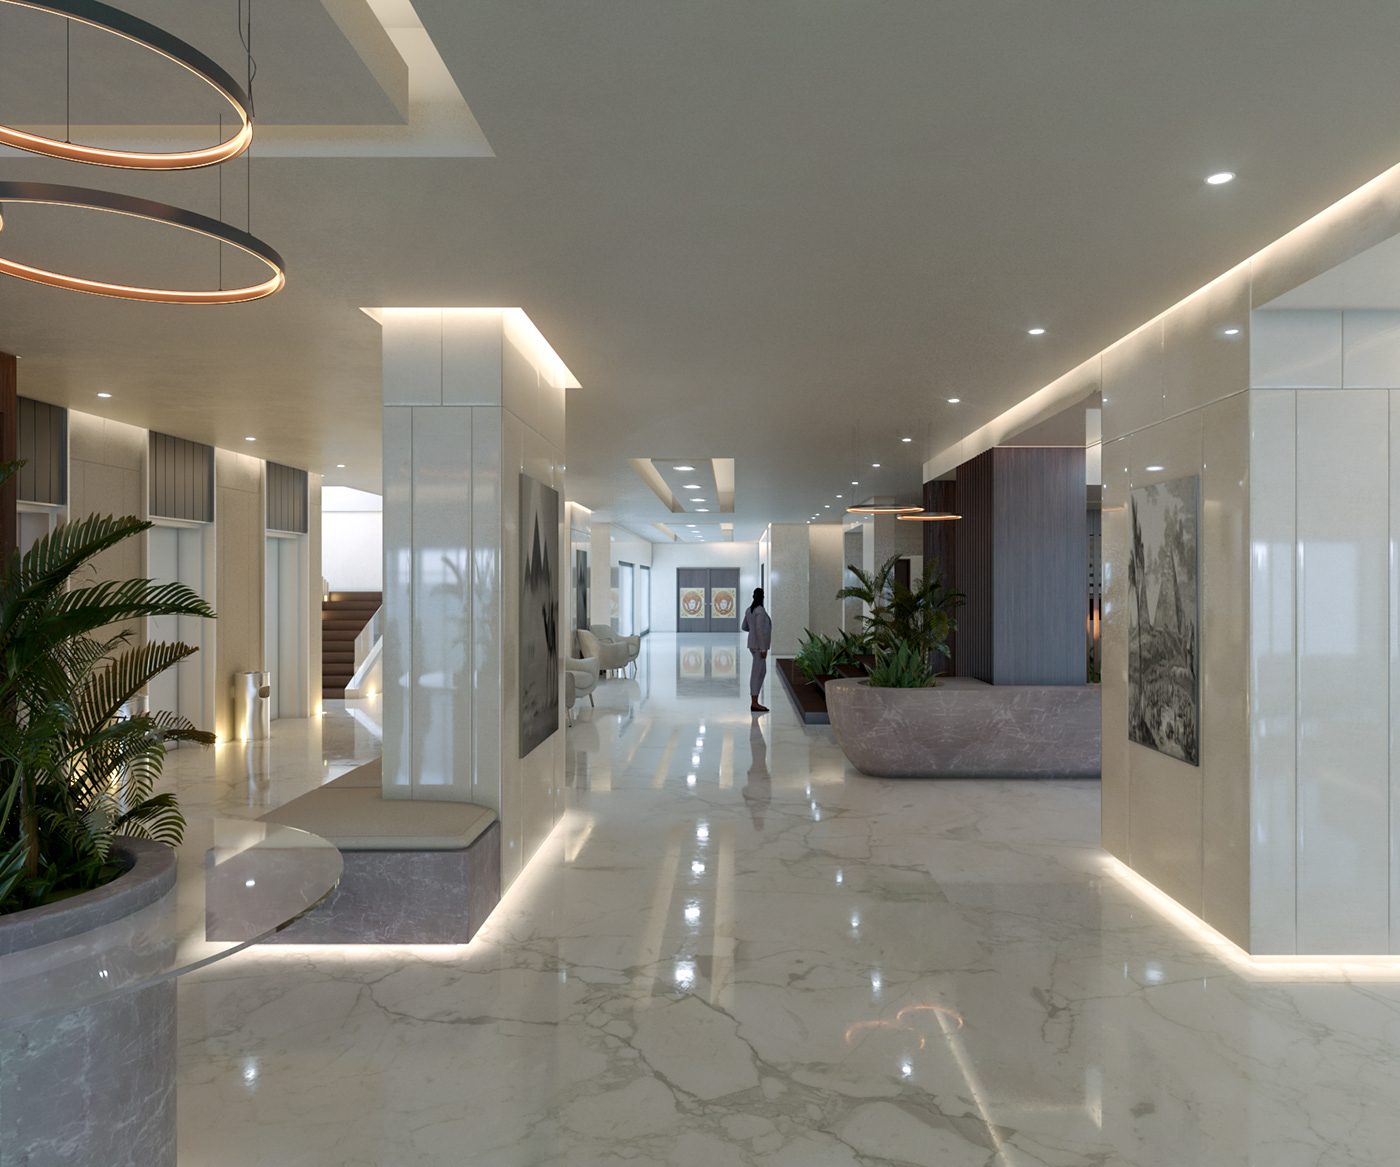 Eslam Hamed Interior architecture 3ds max visualization vray Render hotel reception interior design 